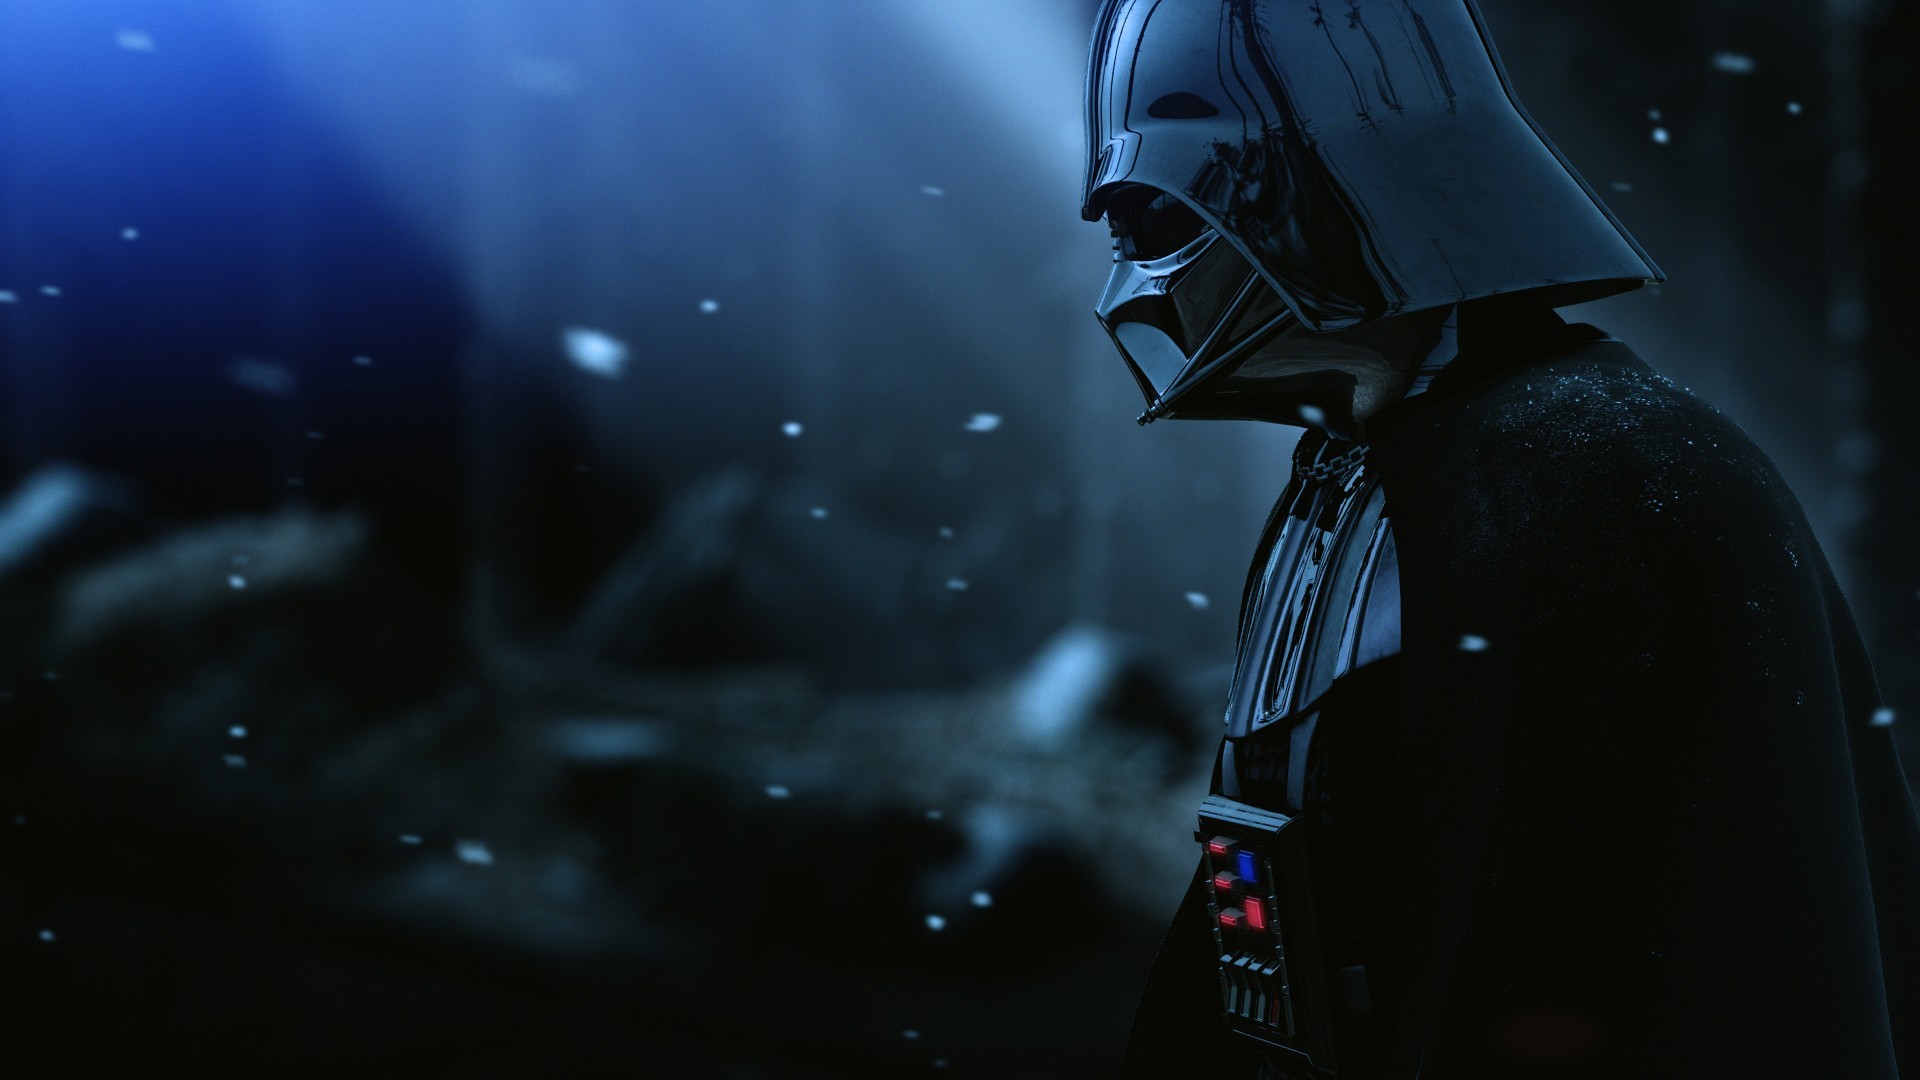 Anime Darth Vader Villain Evil Armor Movies Star Wars Blurred Digital Art Sith Star Wars Villains 1920x1080